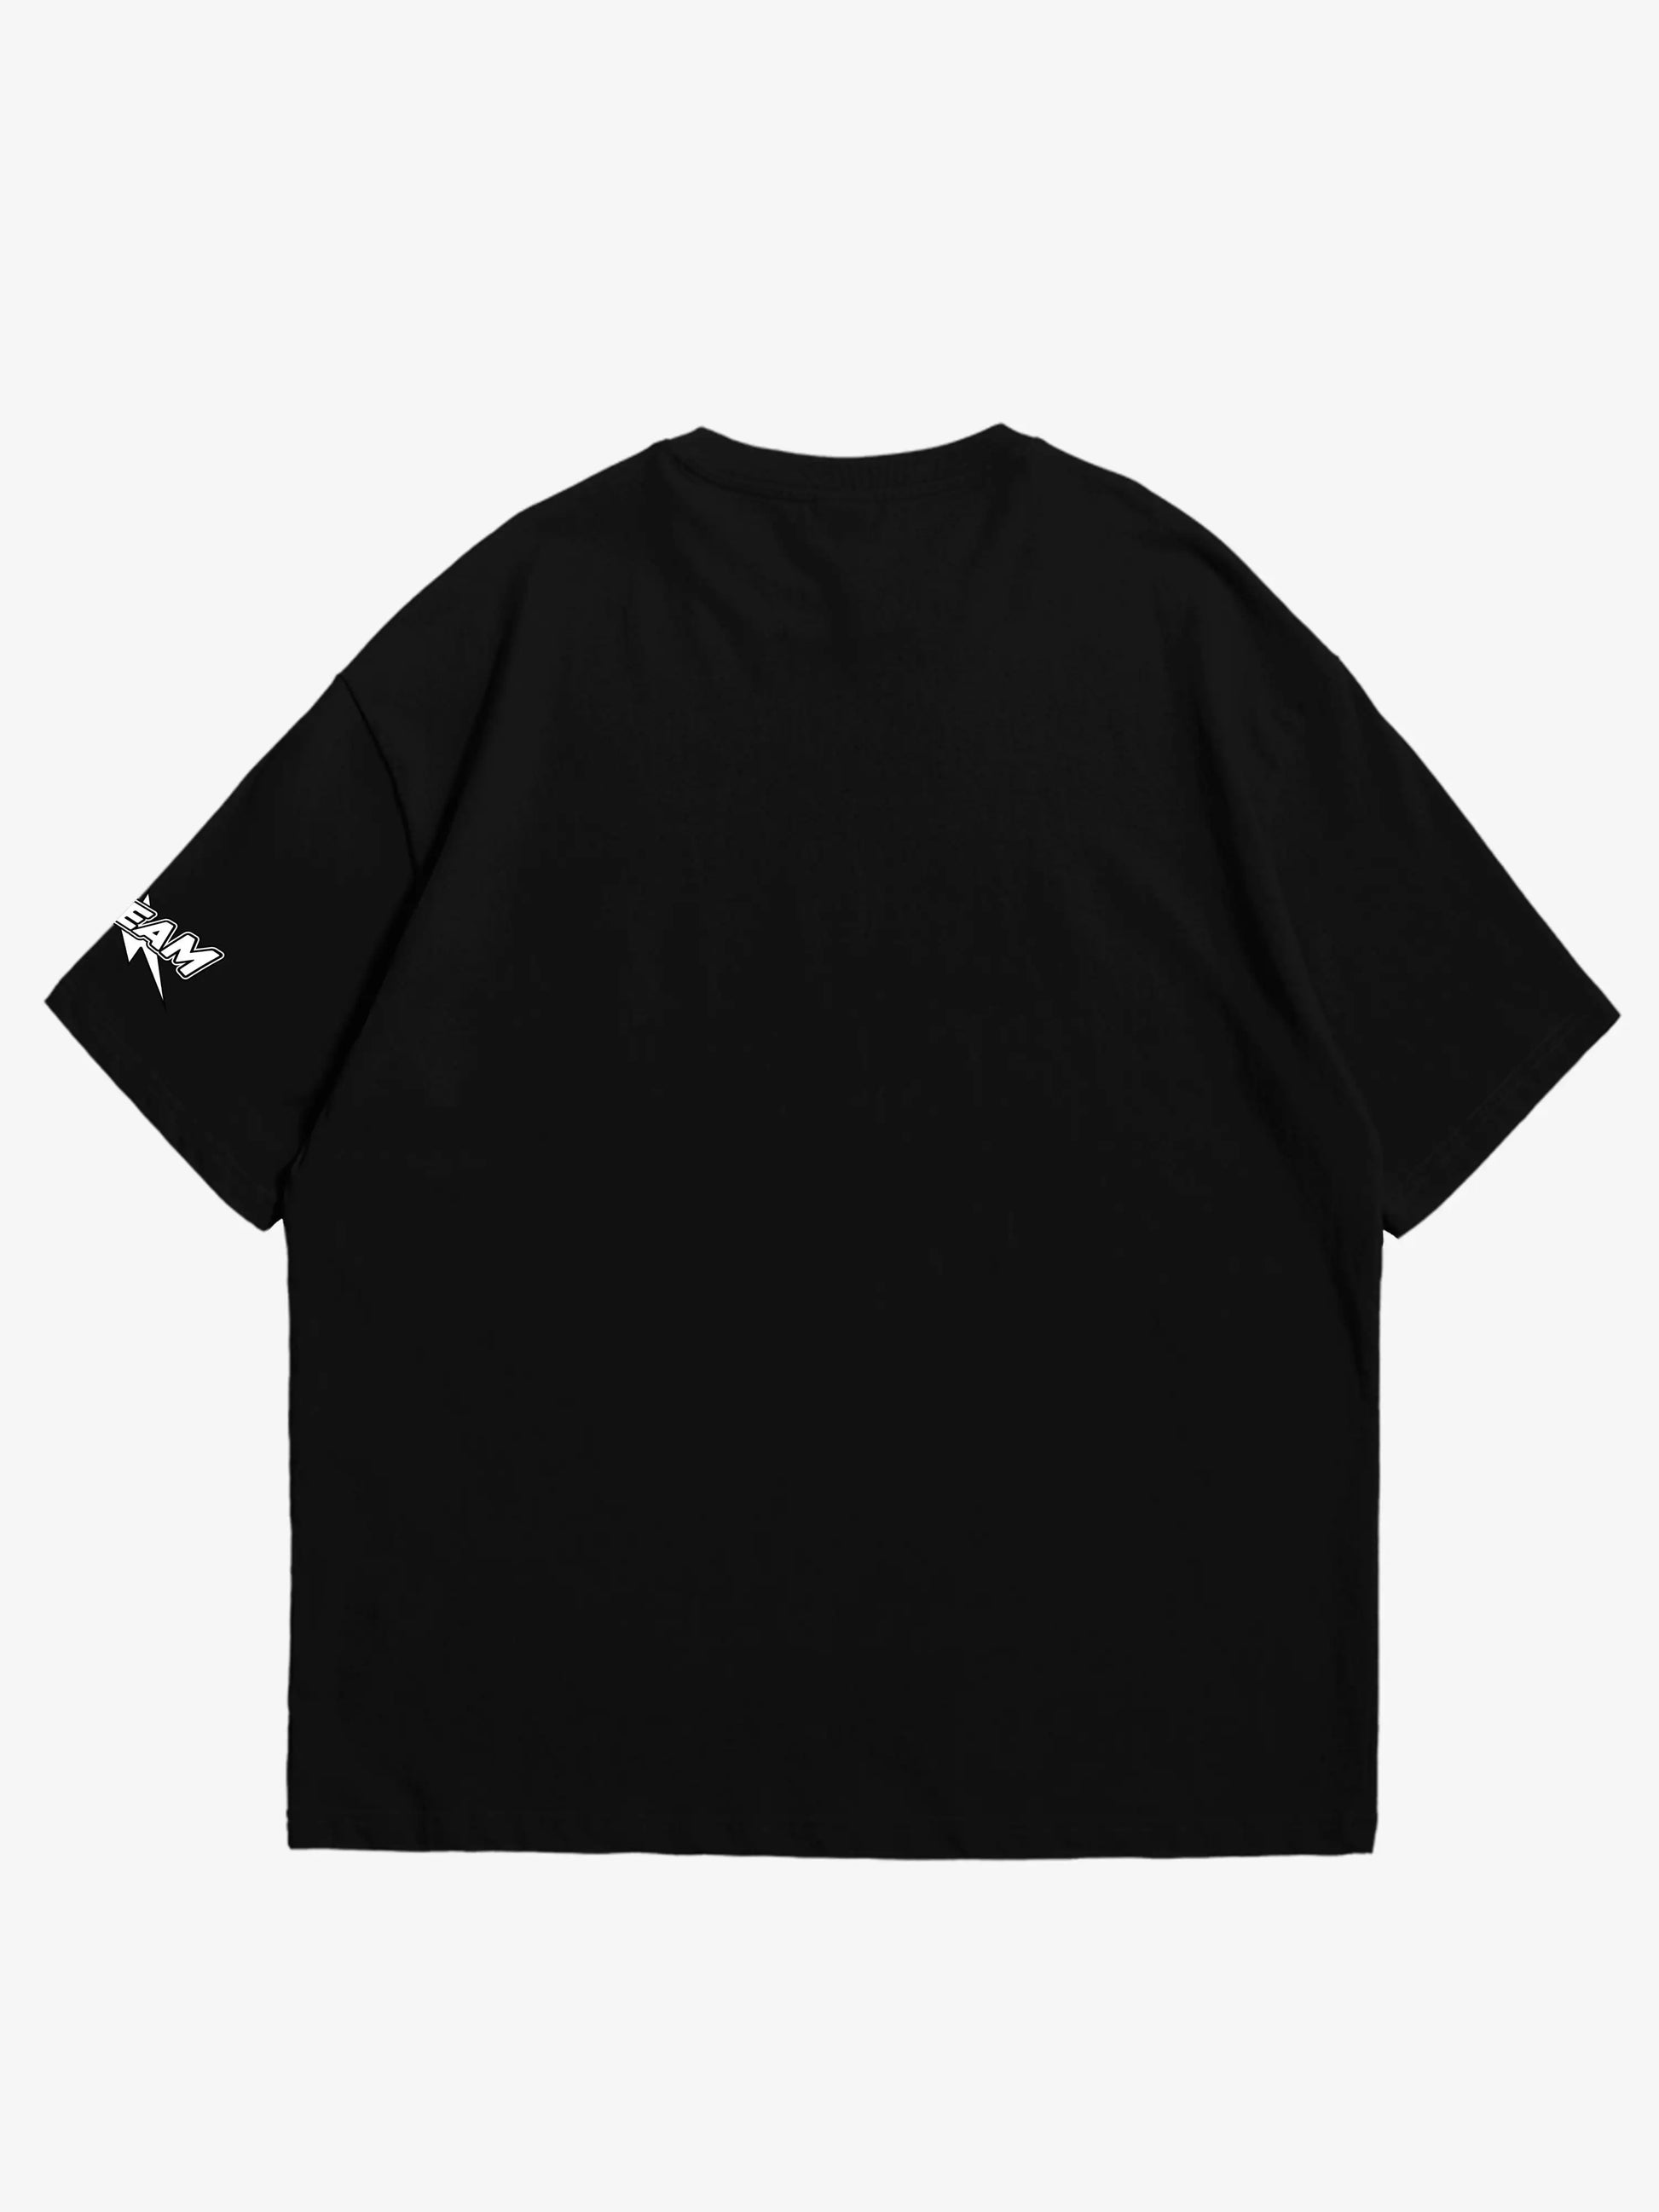 Black oversized t-shirt, led zeppelin rock band graphic y2k print, skream streetwear t-shirt